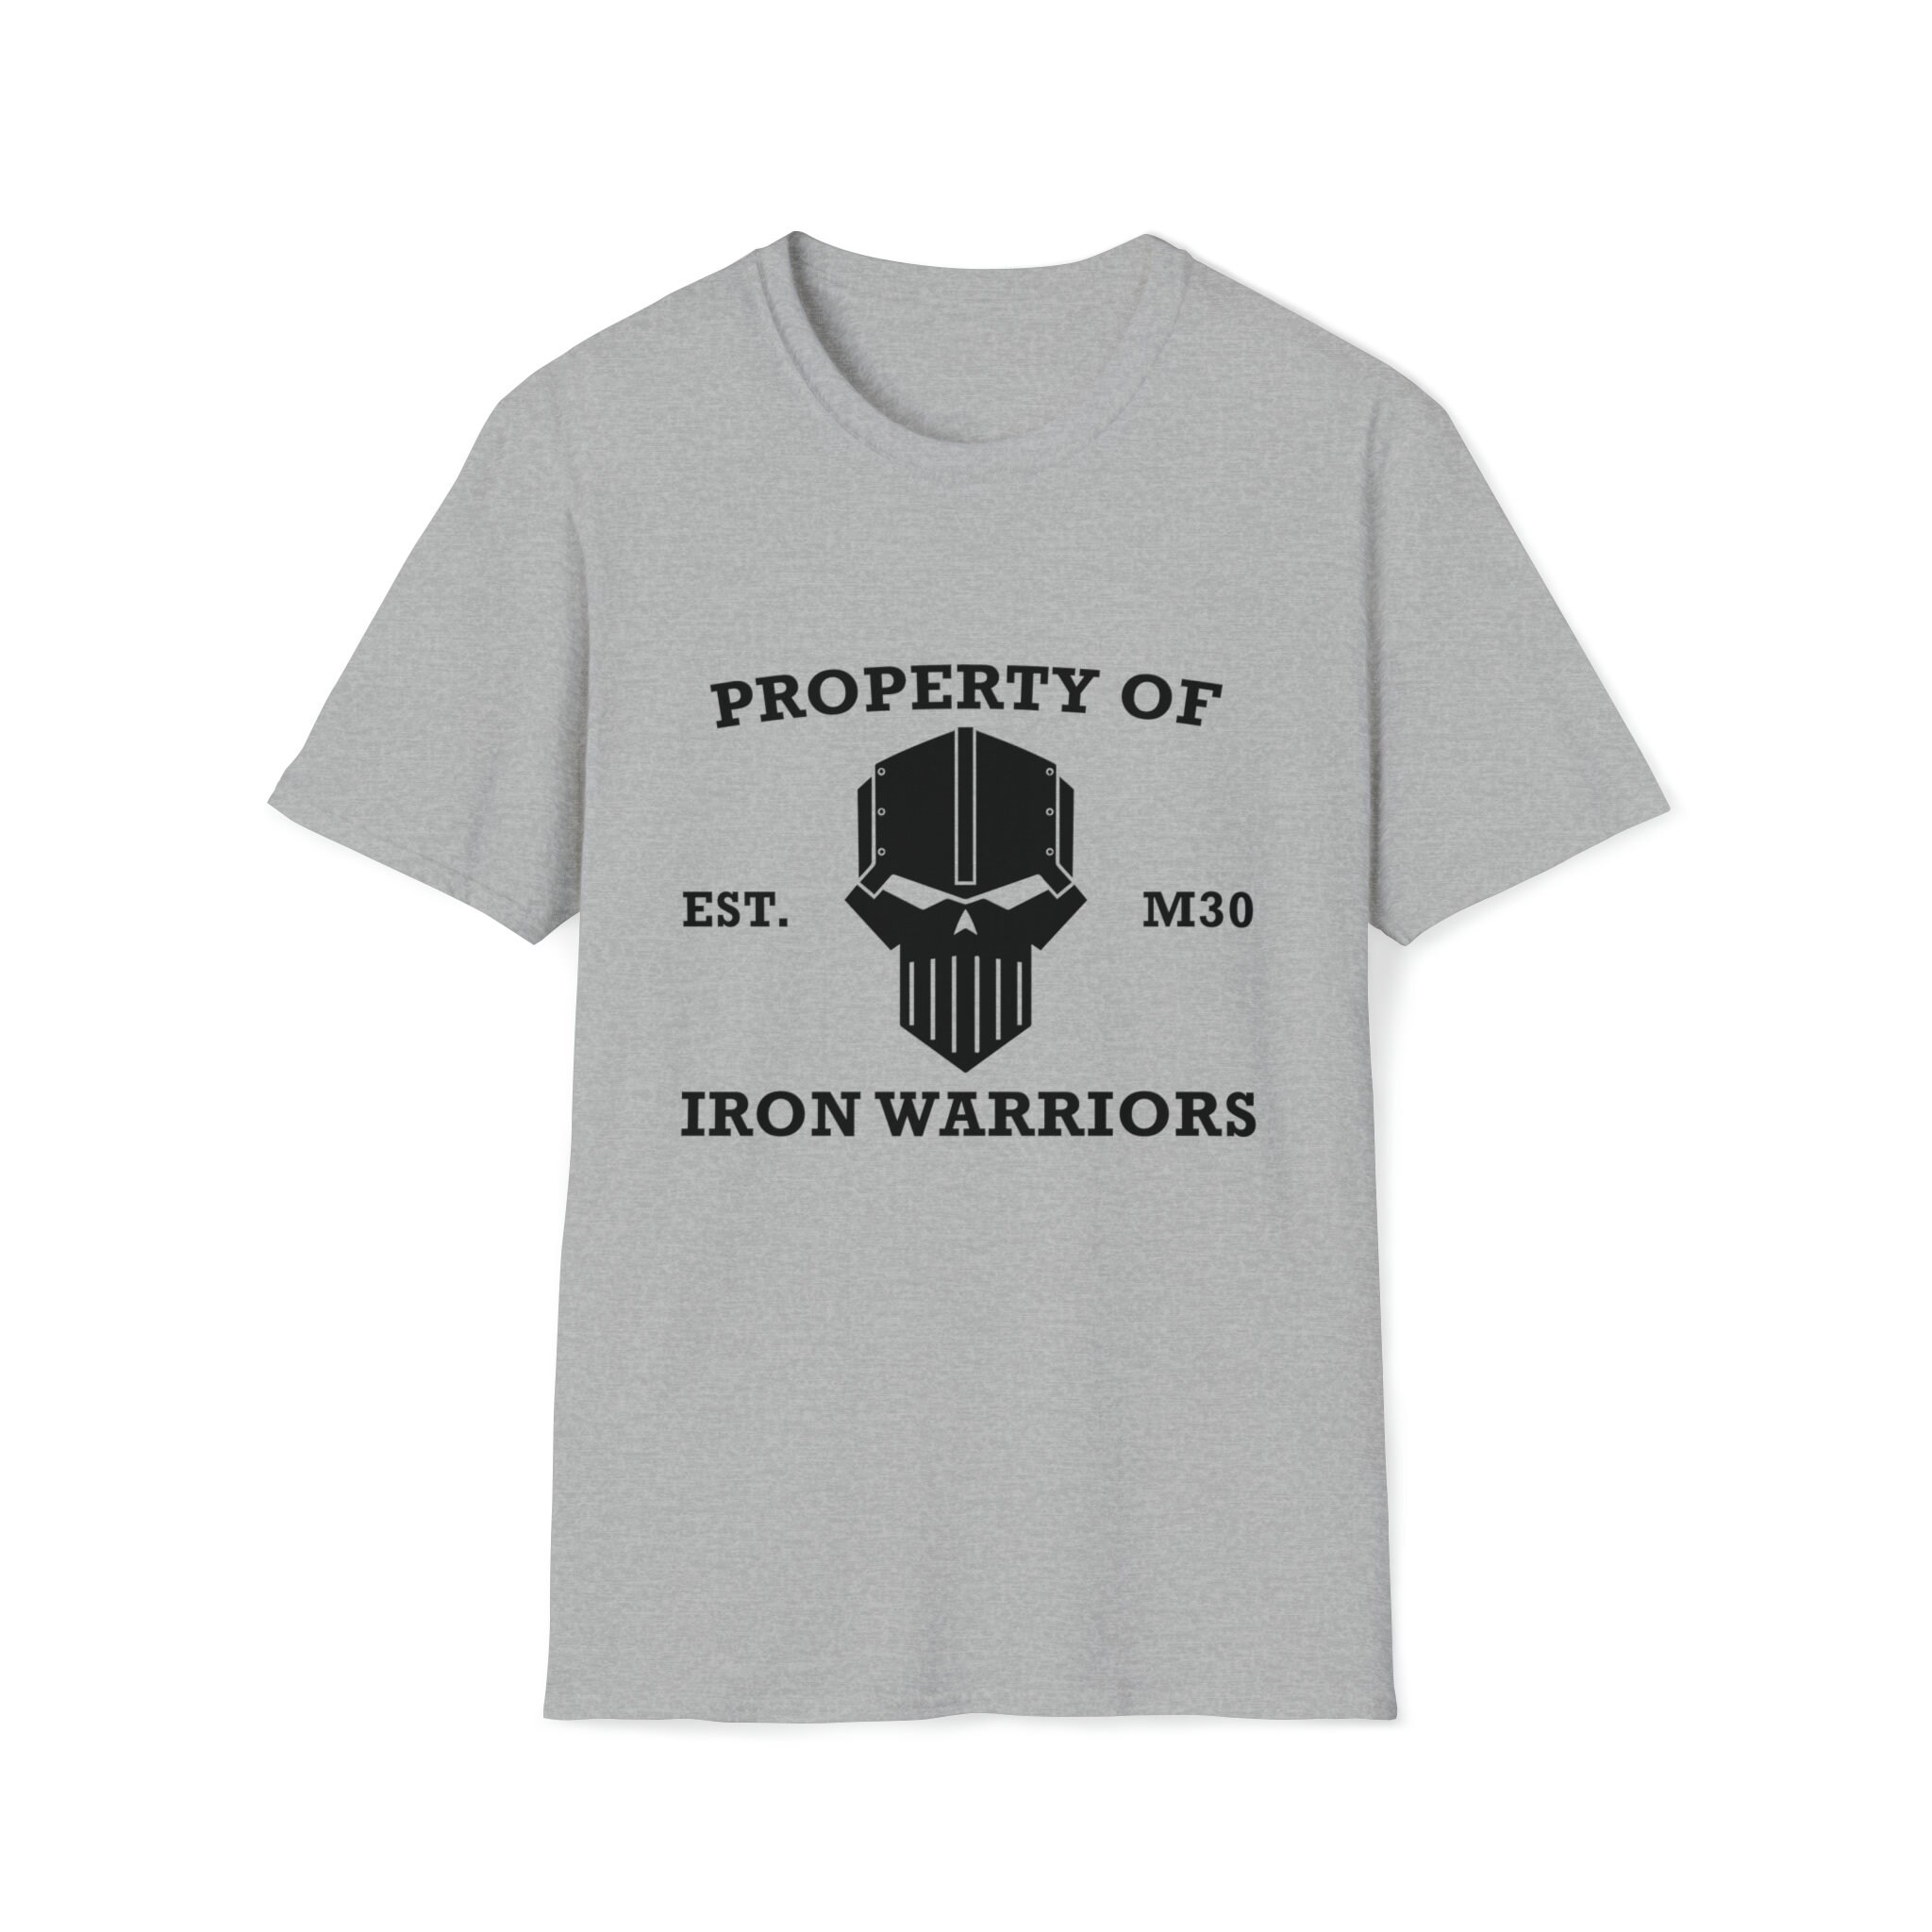 Iron Warriors image